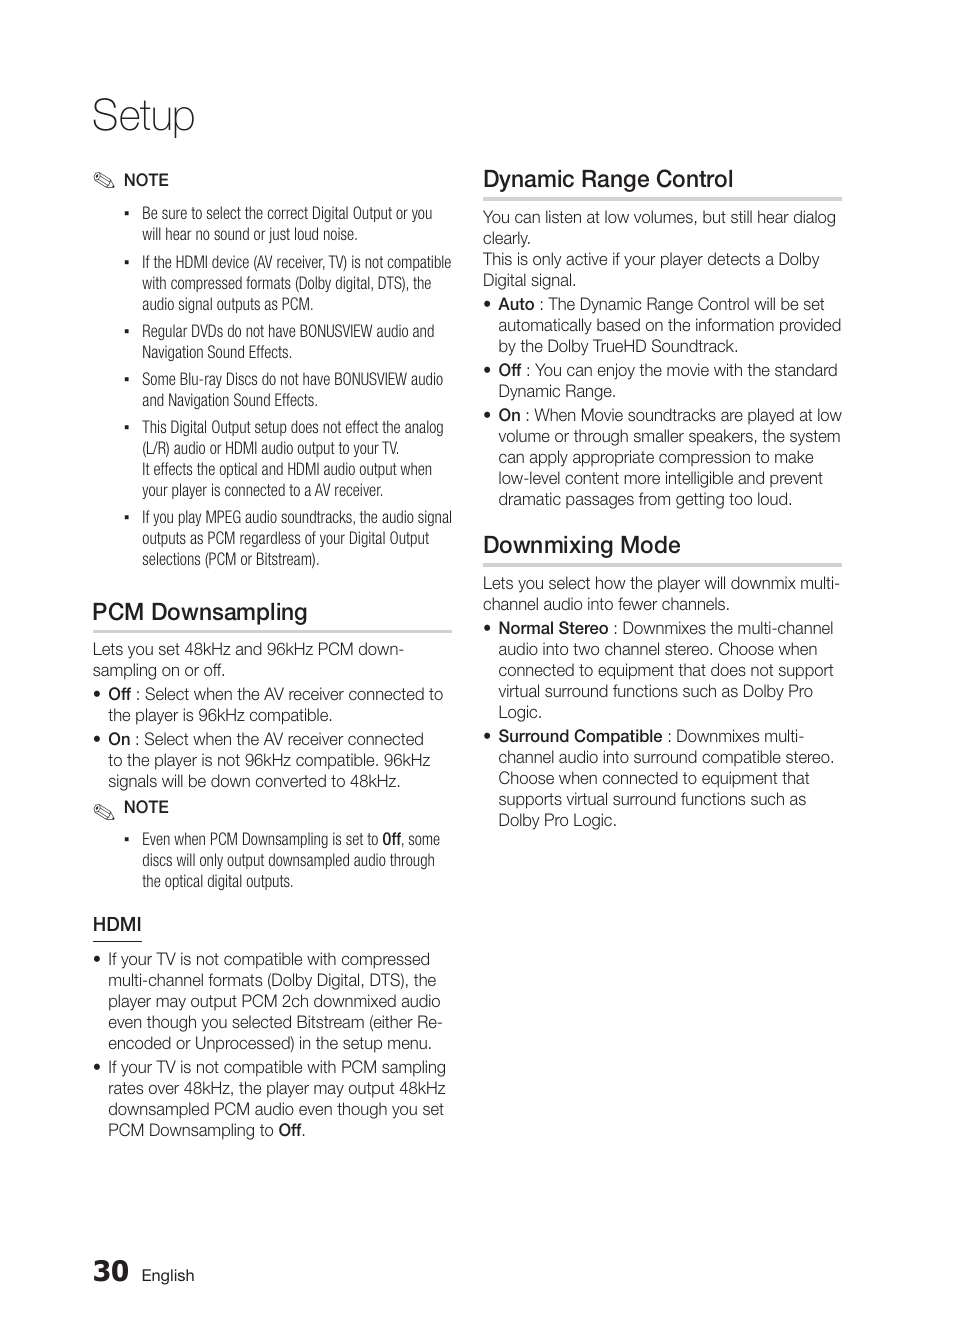 Pcm downsampling, Dynamic range control, Downmixing mode | Setup | Samsung BD-D5250C-ZA User Manual | Page 30 / 76